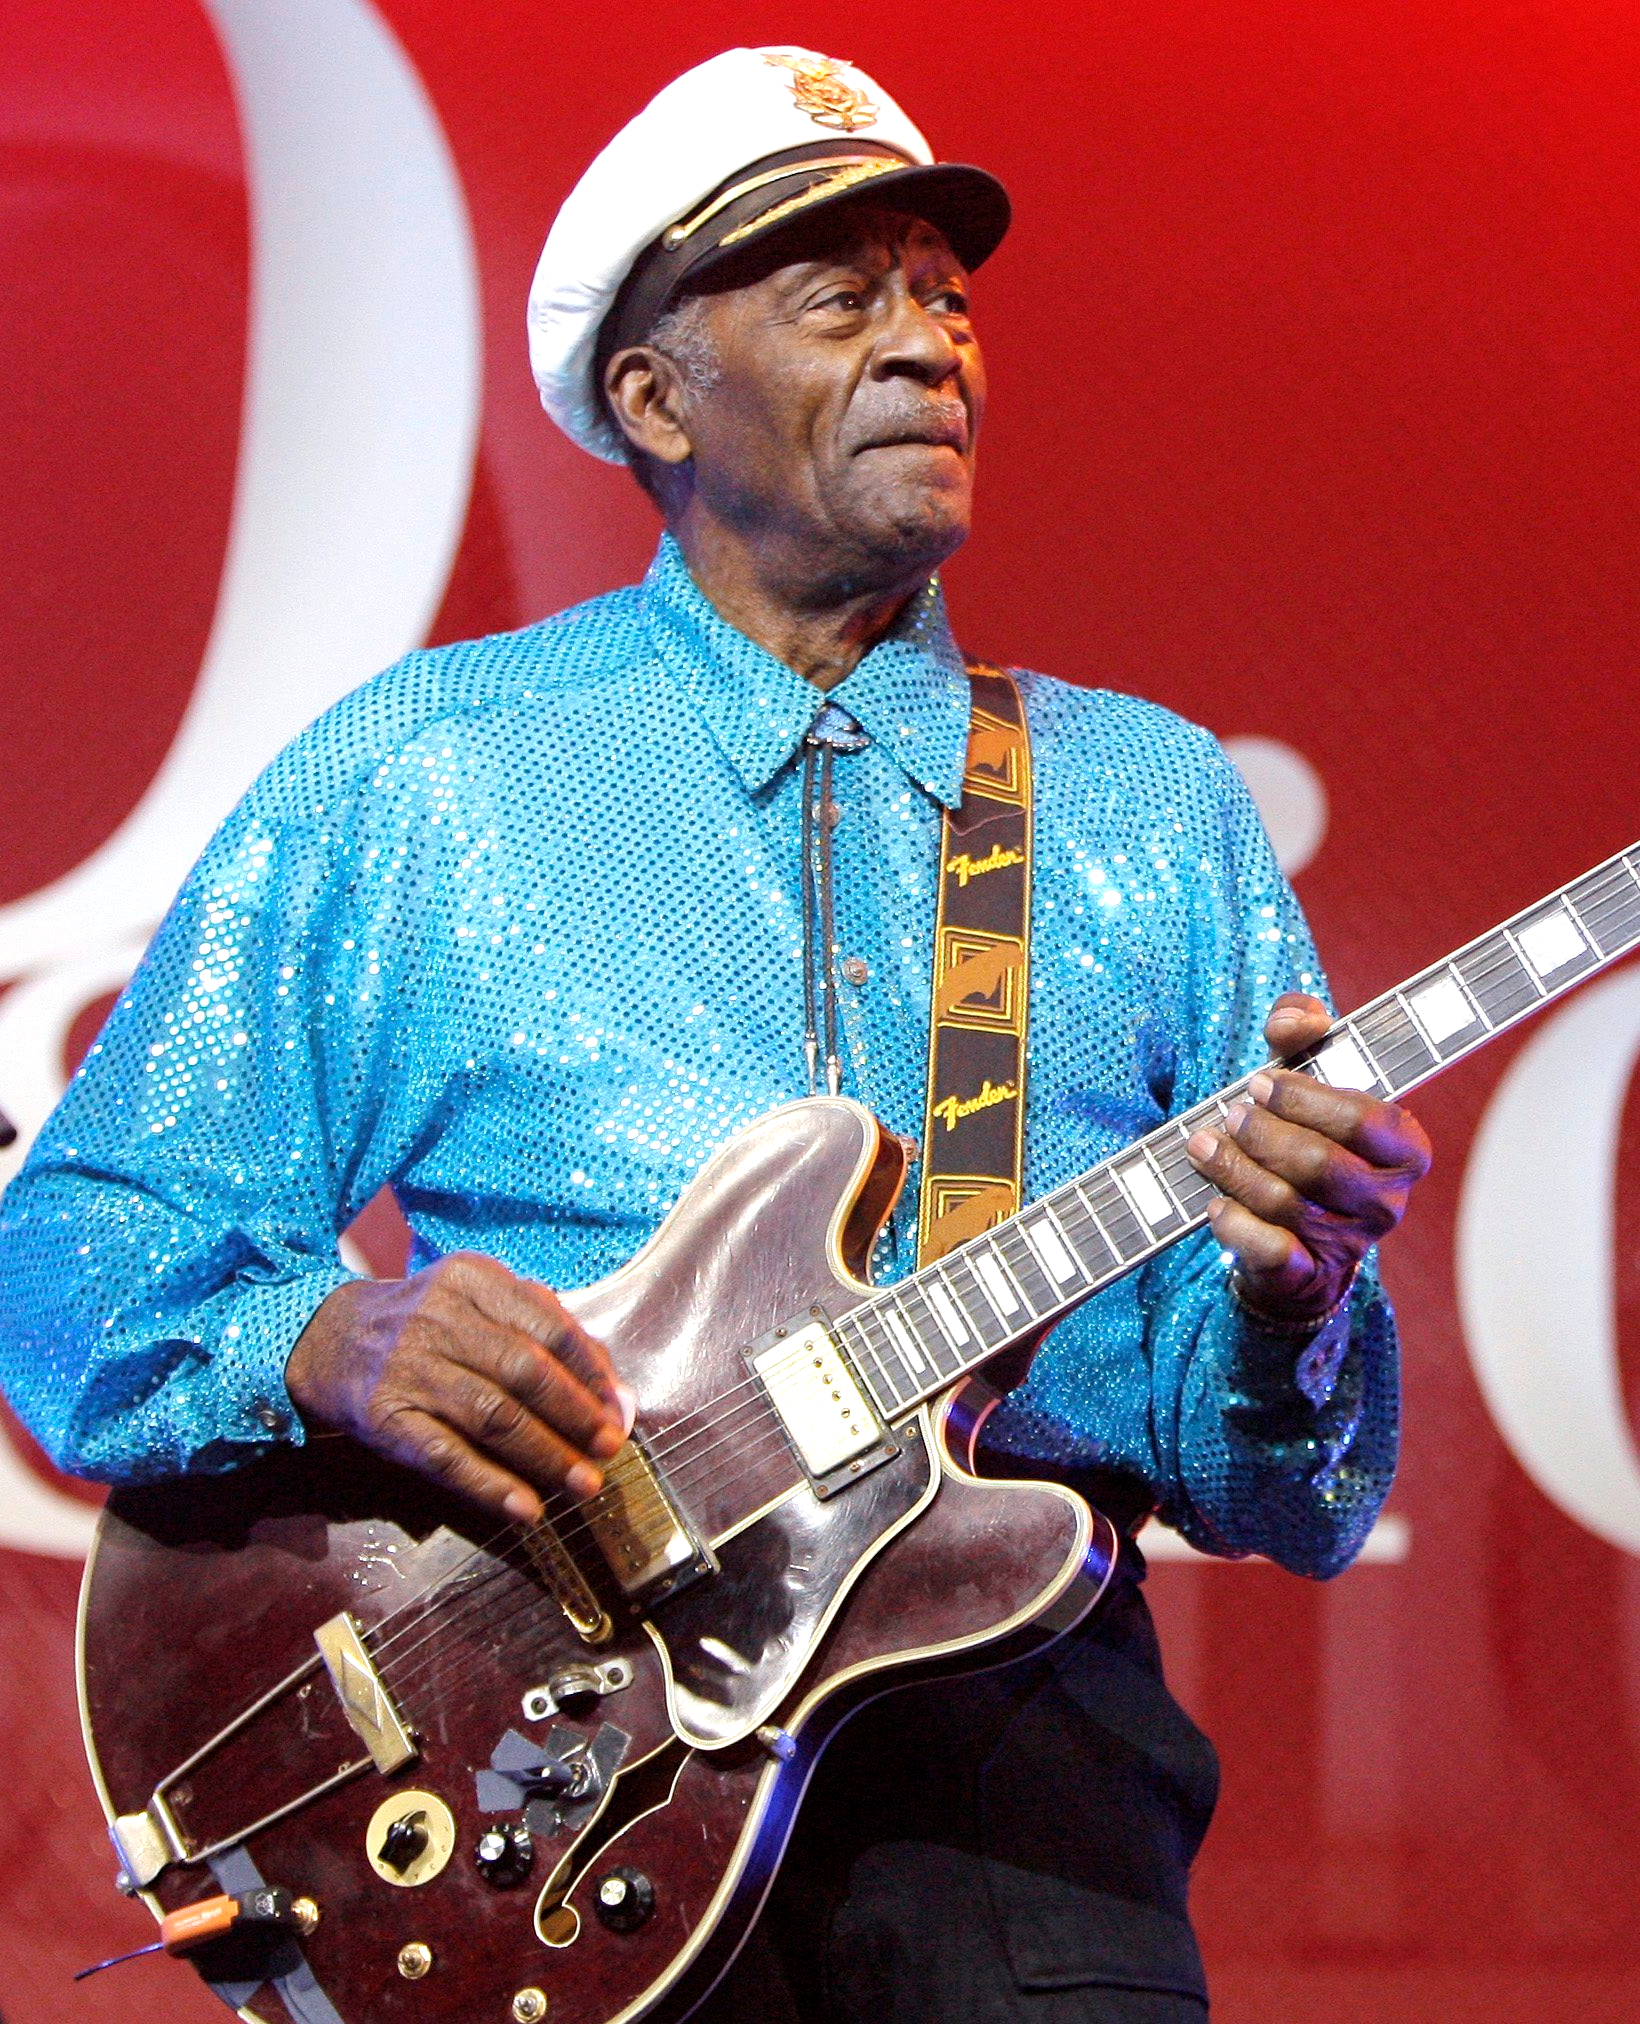 Legendary U.S. musician Chuck Berry is shown in this Nov. 13, 2007 file photo. (Peter Klaunzer/Keystone via AP)